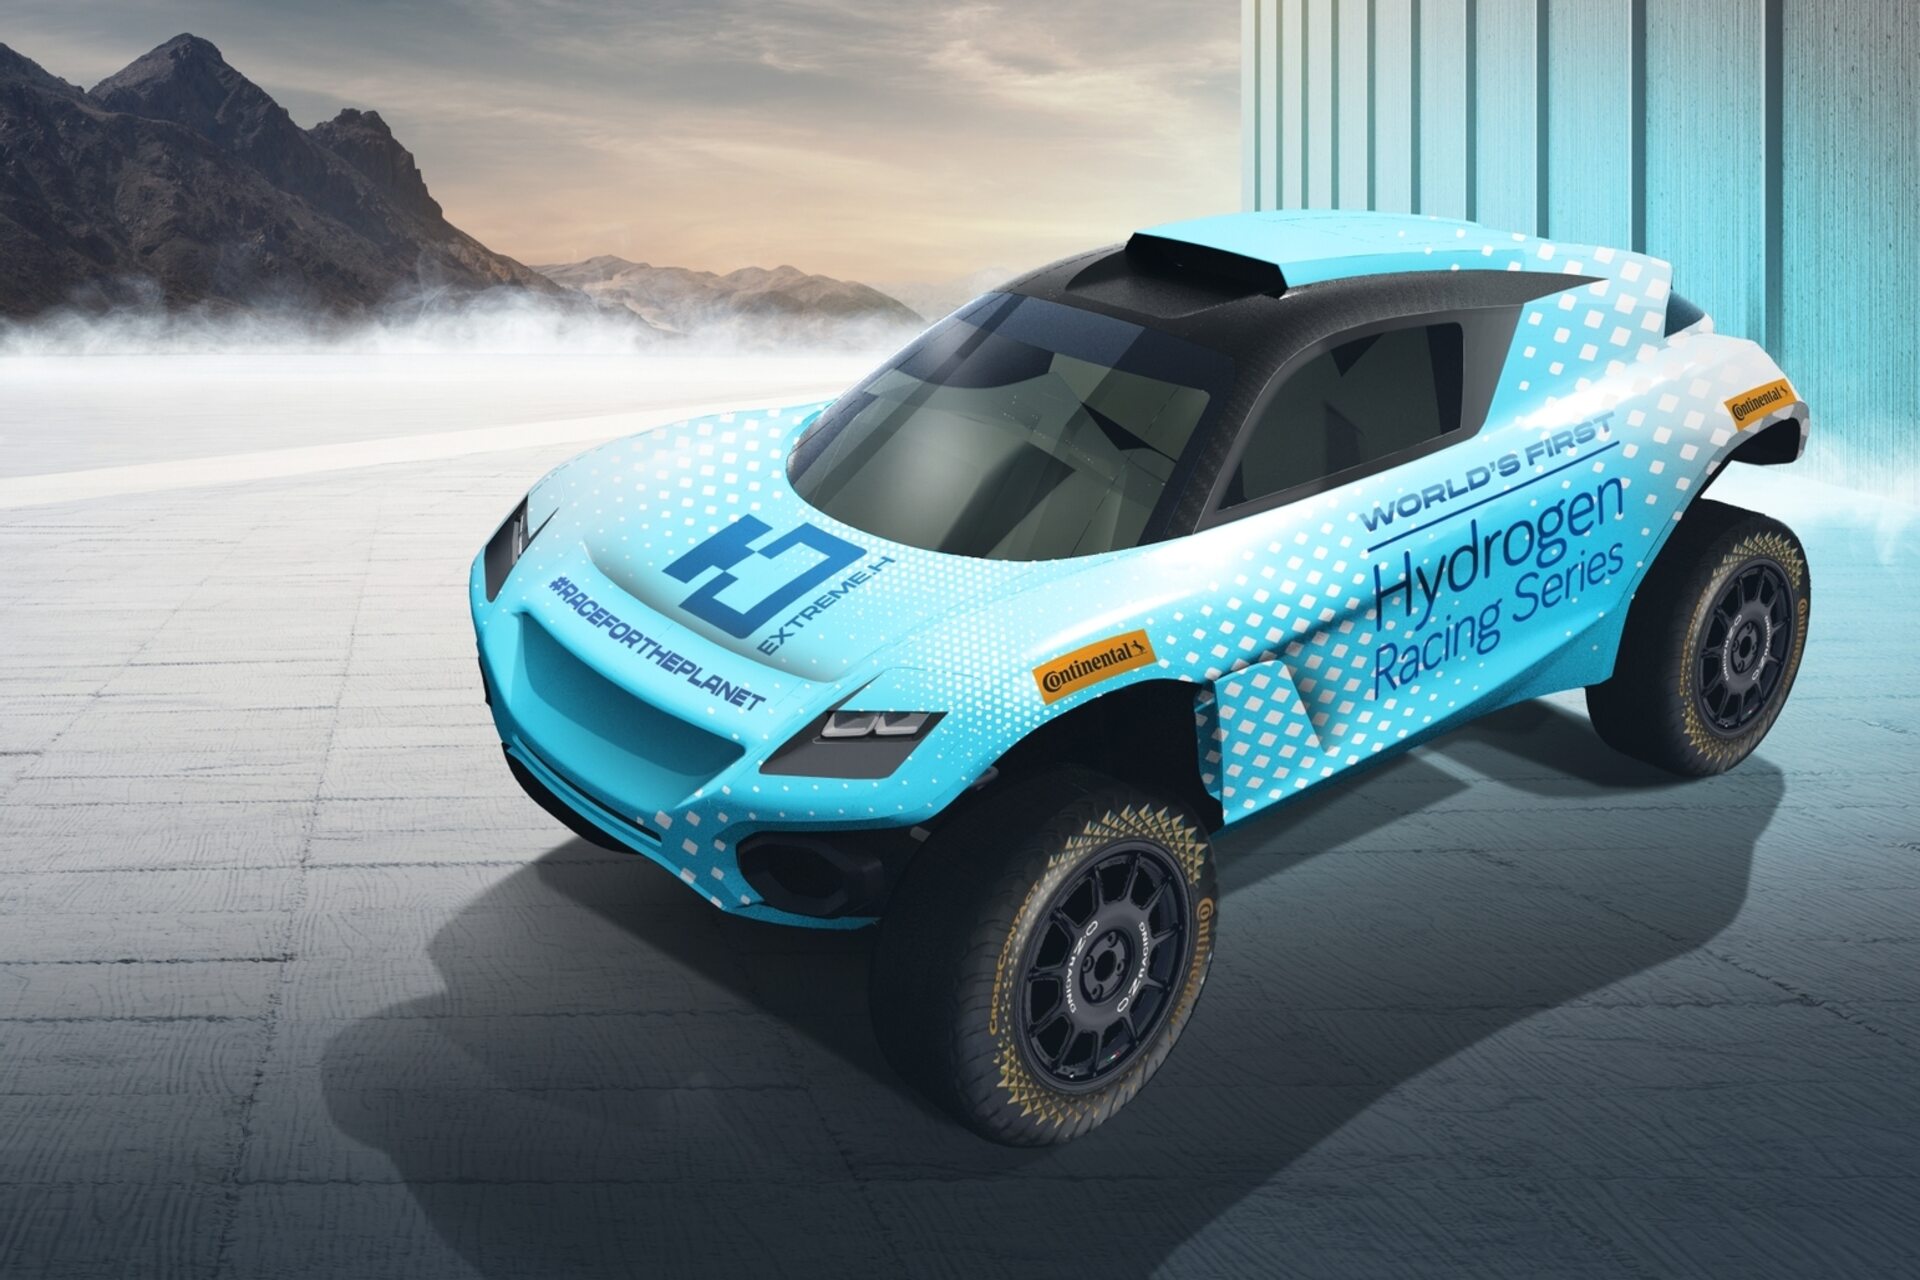 Extreme H: Automobile će pokretati vodonične gorive ćelije počevši od sezone 2025